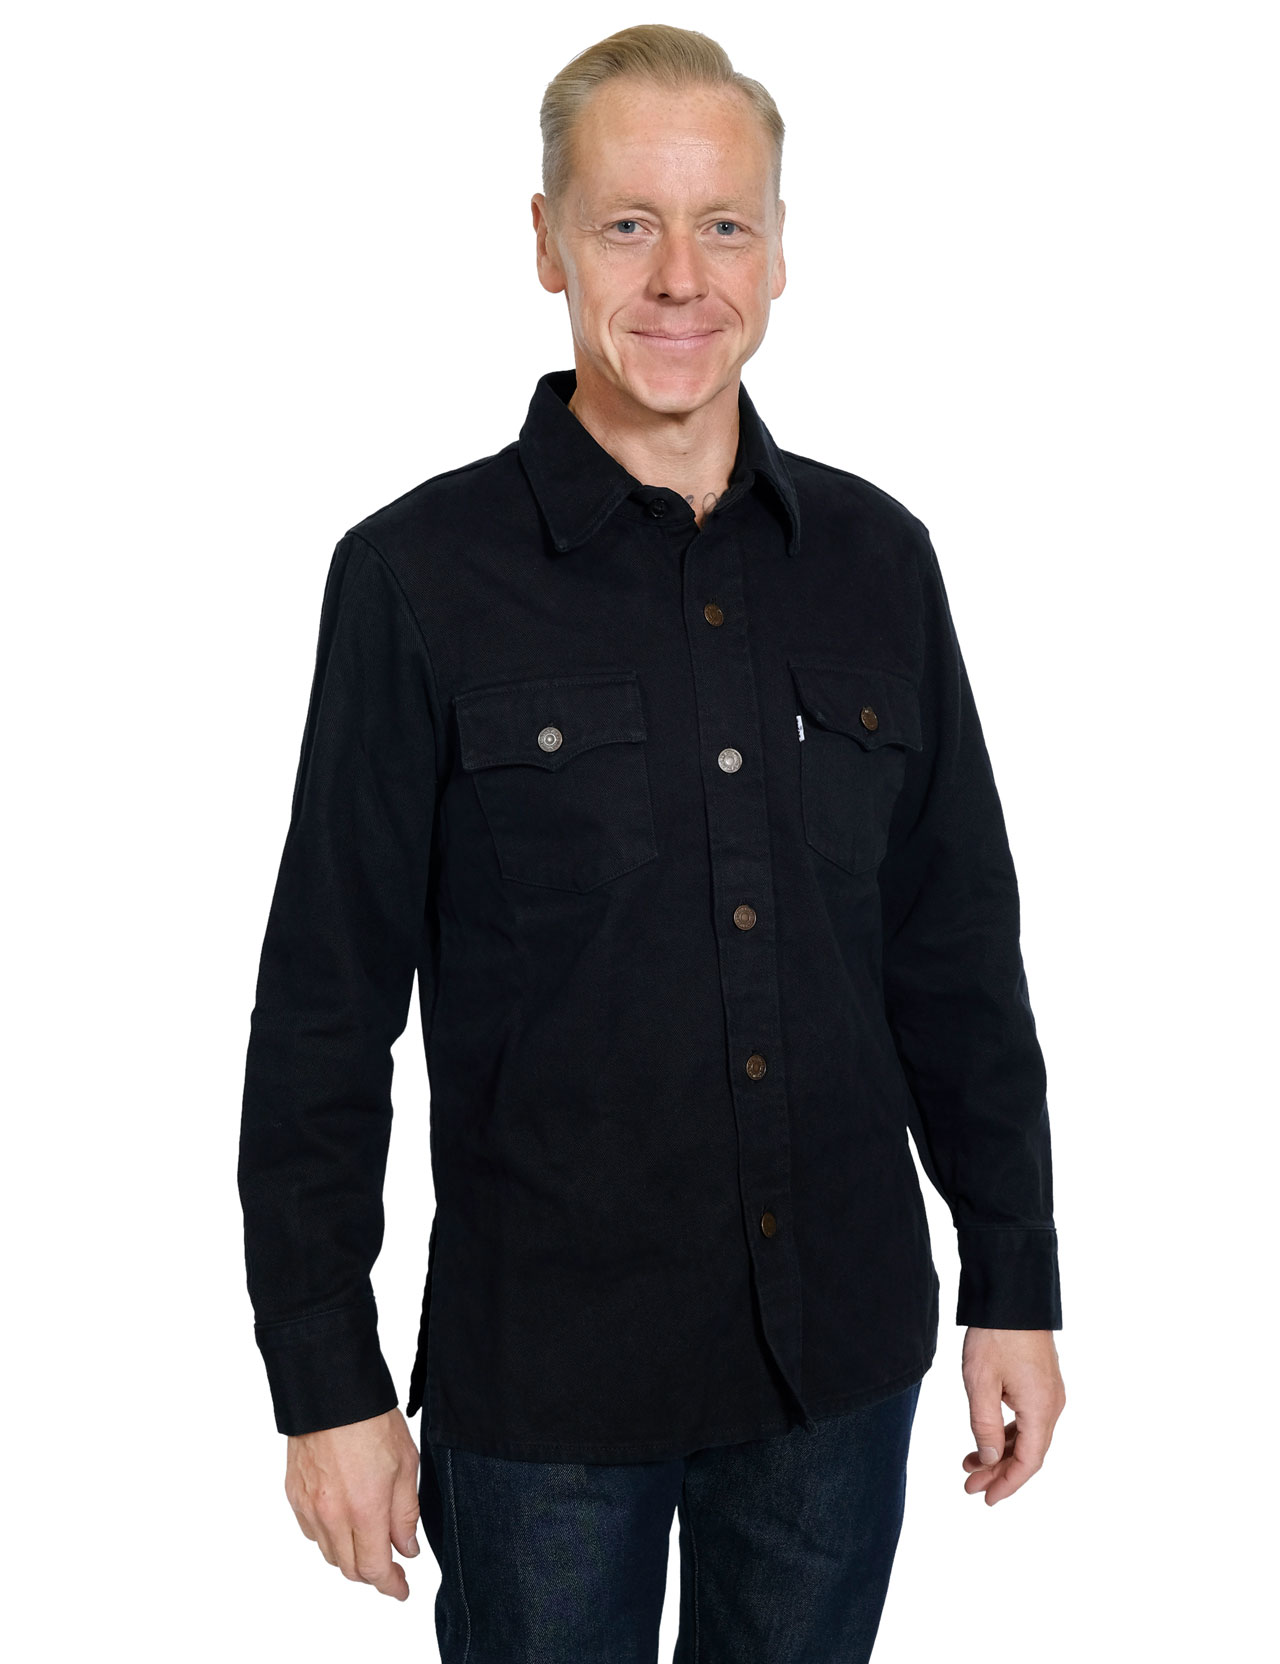 Levis Vintage Clothing - Shirt Jacket Caviar - Black